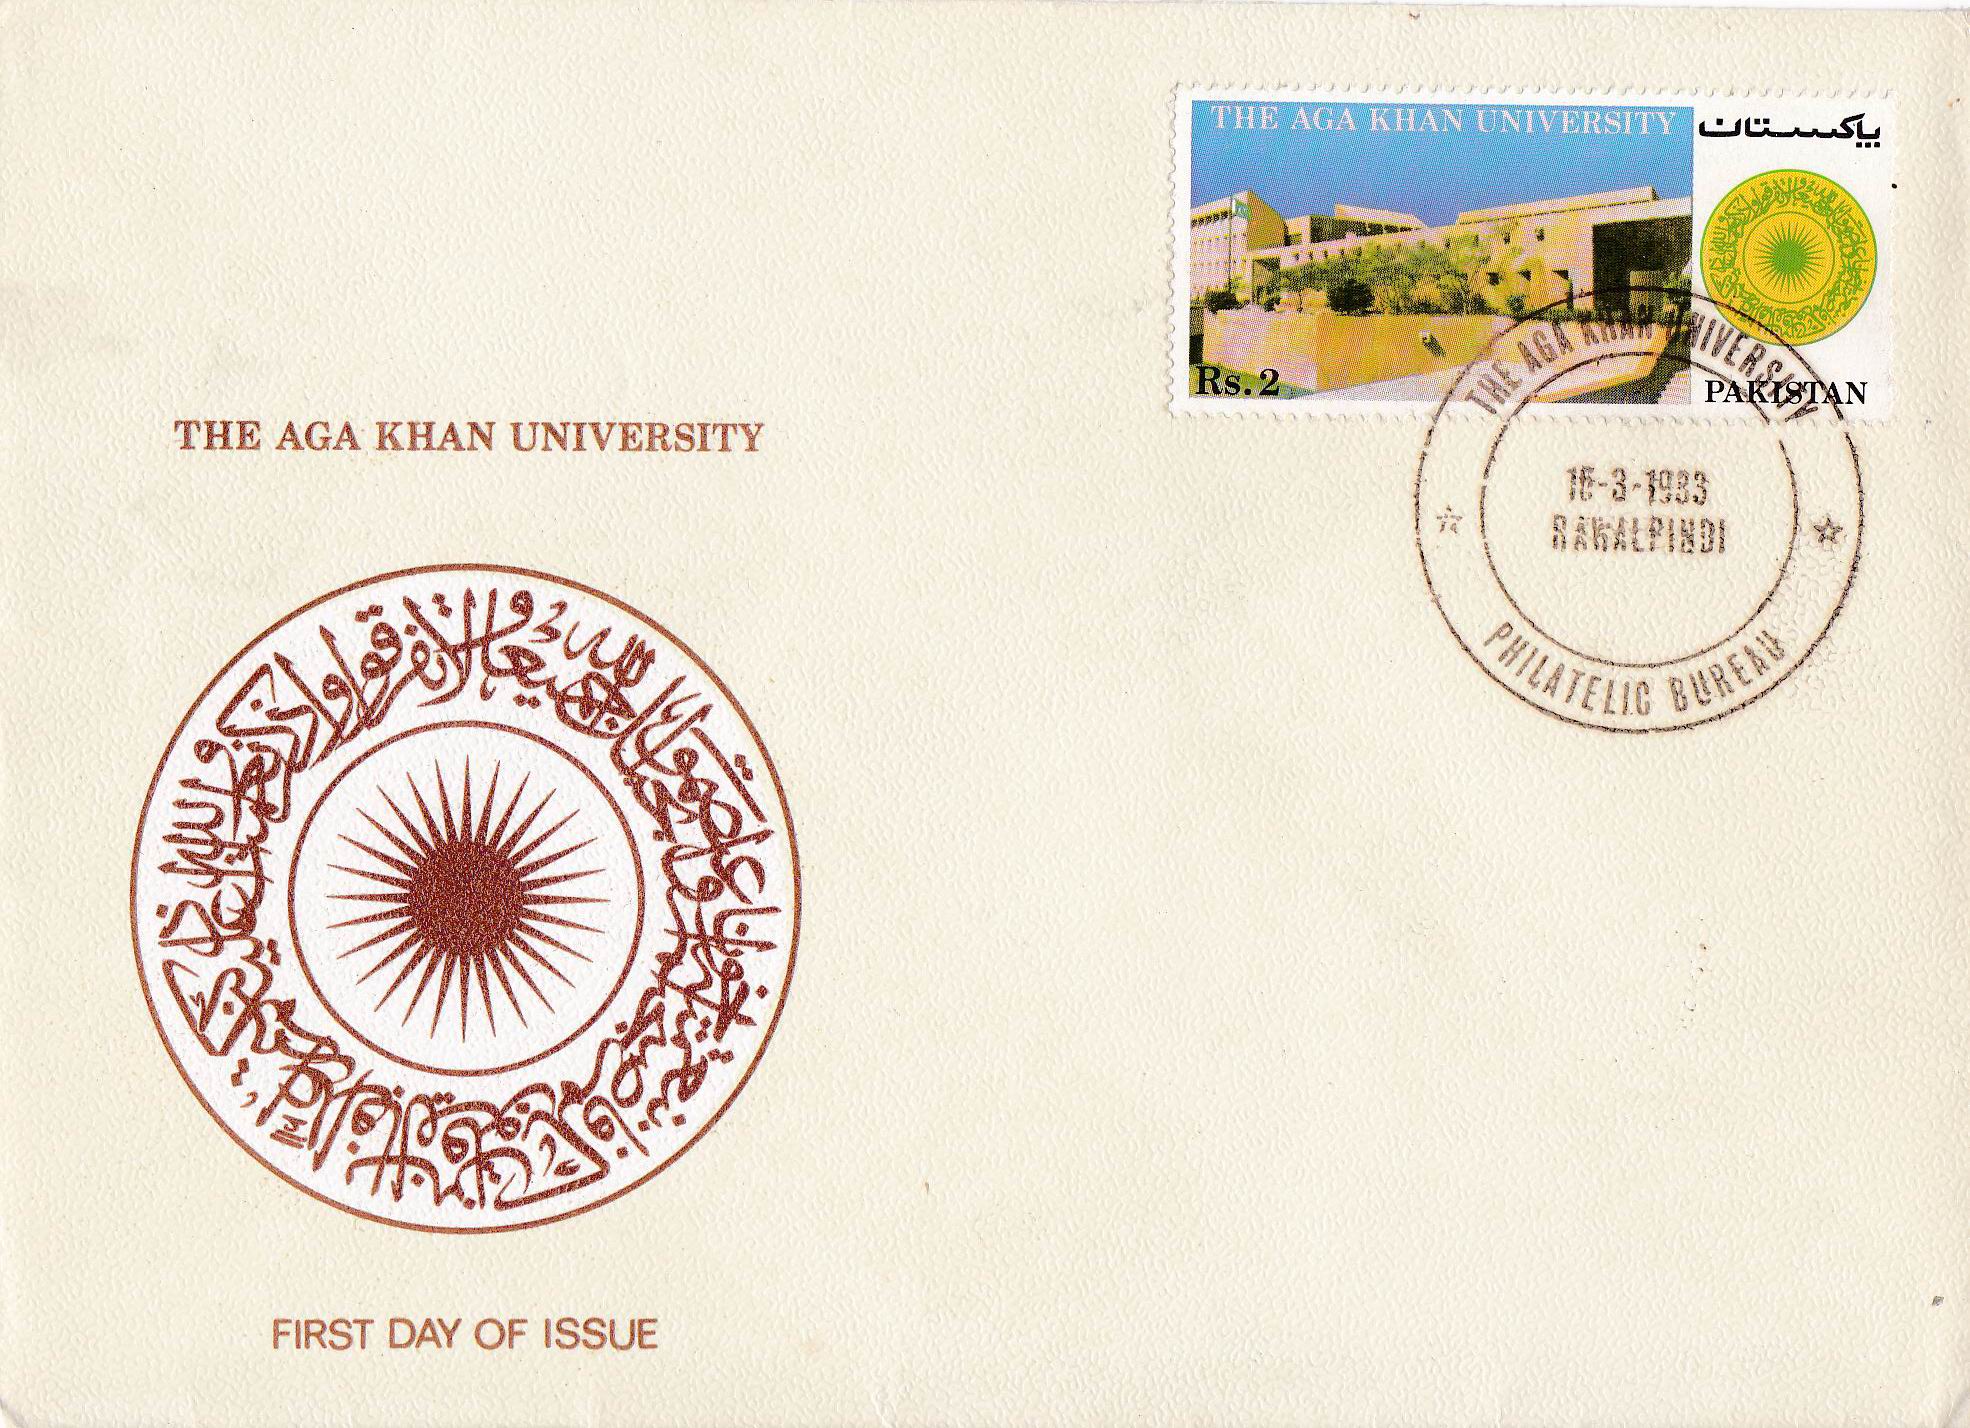 Pakistan Fdc 1983 Brochure & Stamp Aga Khan University - Click Image to Close